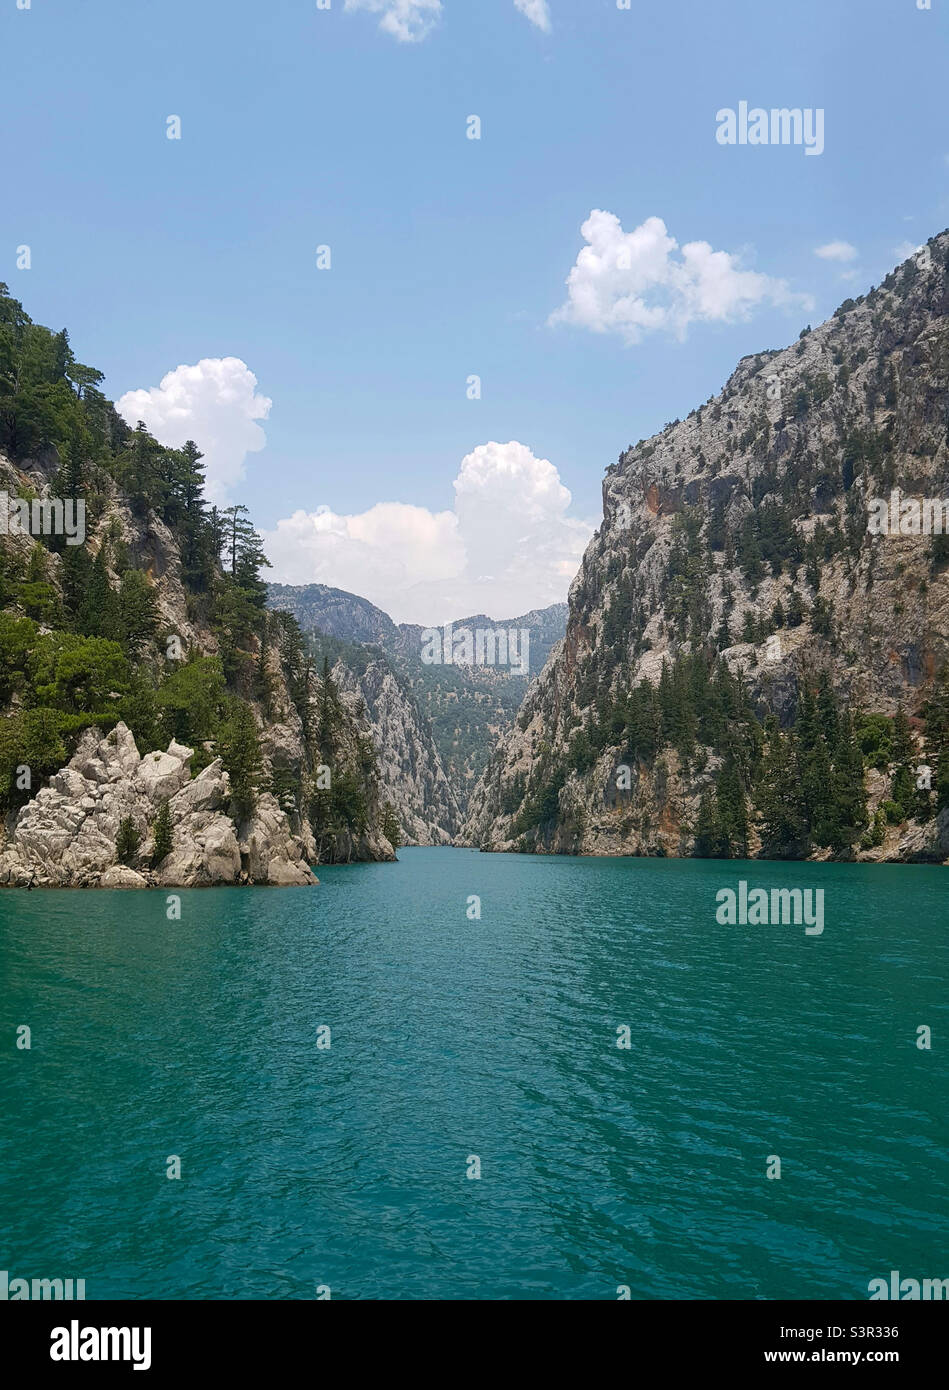 Green Canyon lake, lake, mountain lake, mountain river, mountains, Green Canyon, Alanya, Turkey, travel, river, nature reserve Stock Photo